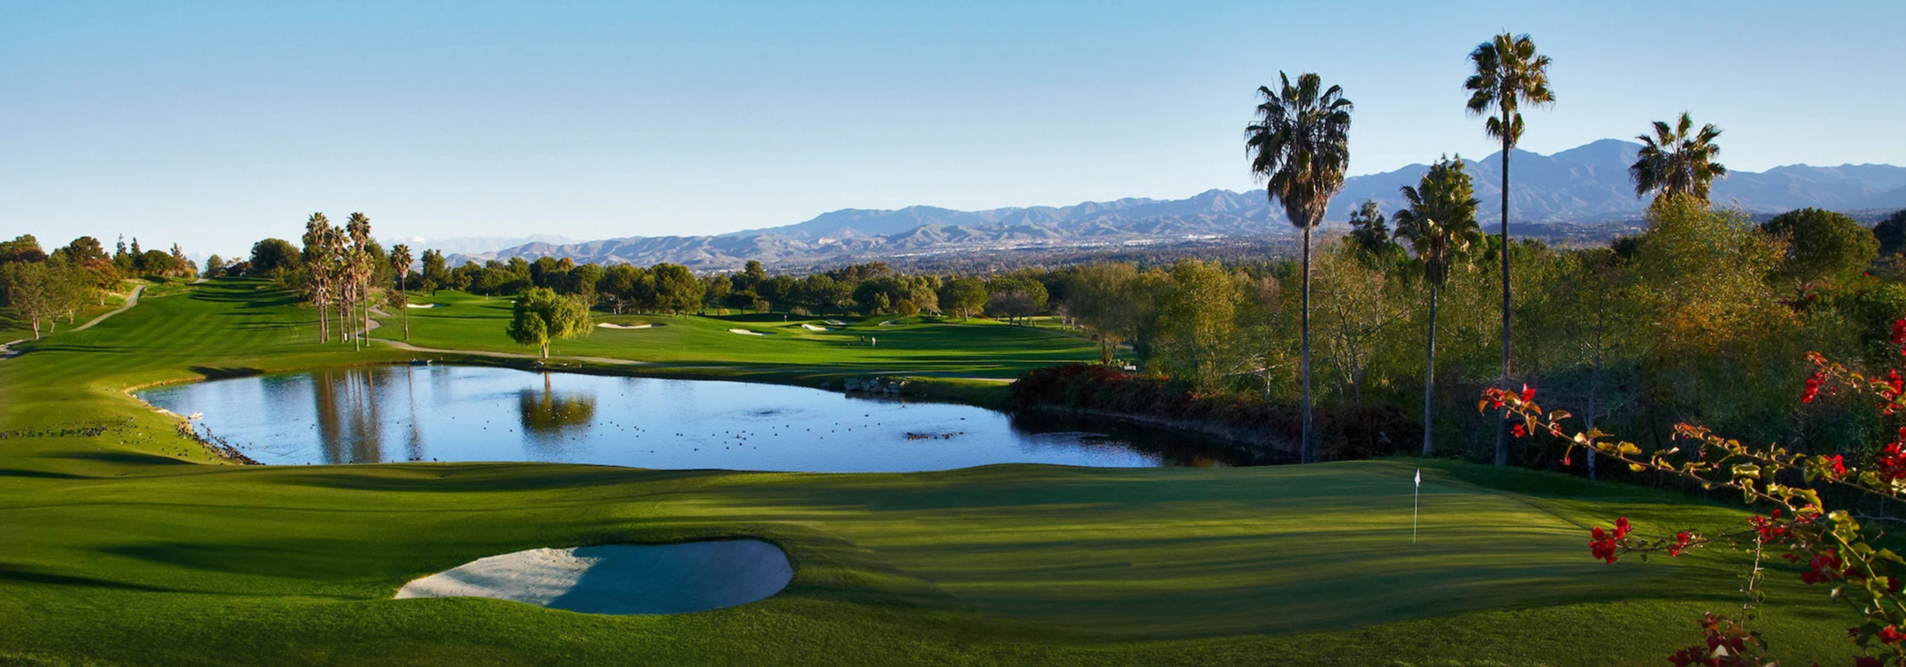 Aliso Viejo Country Club Mountain View Irvine Classic Golf Tournament